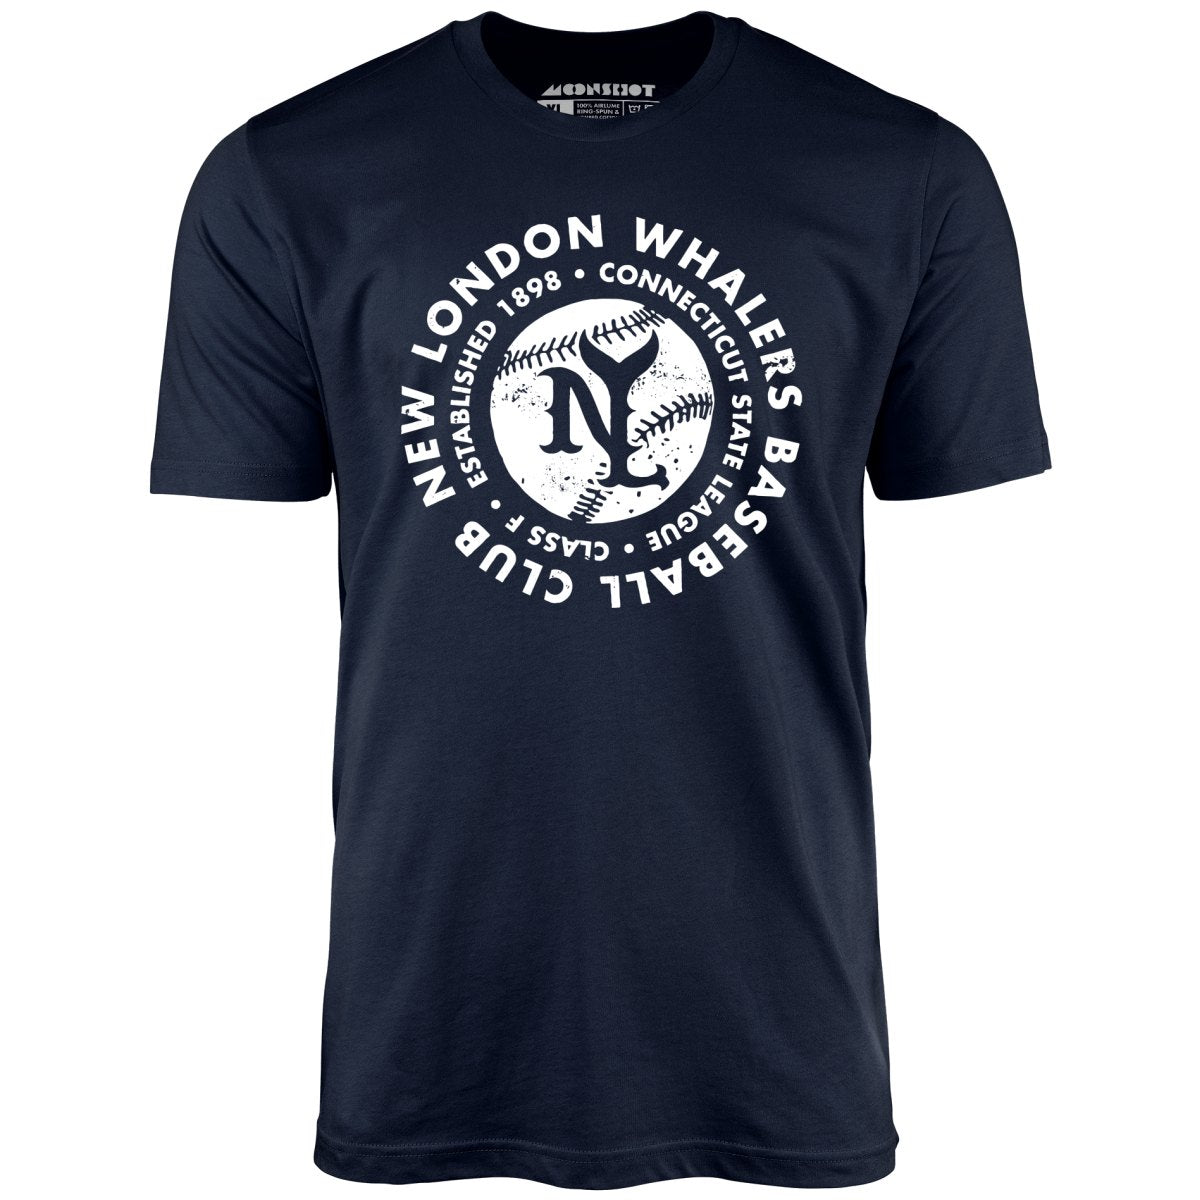 New London Whalers - Connecticut - Vintage Defunct Baseball Teams - Unisex T-Shirt